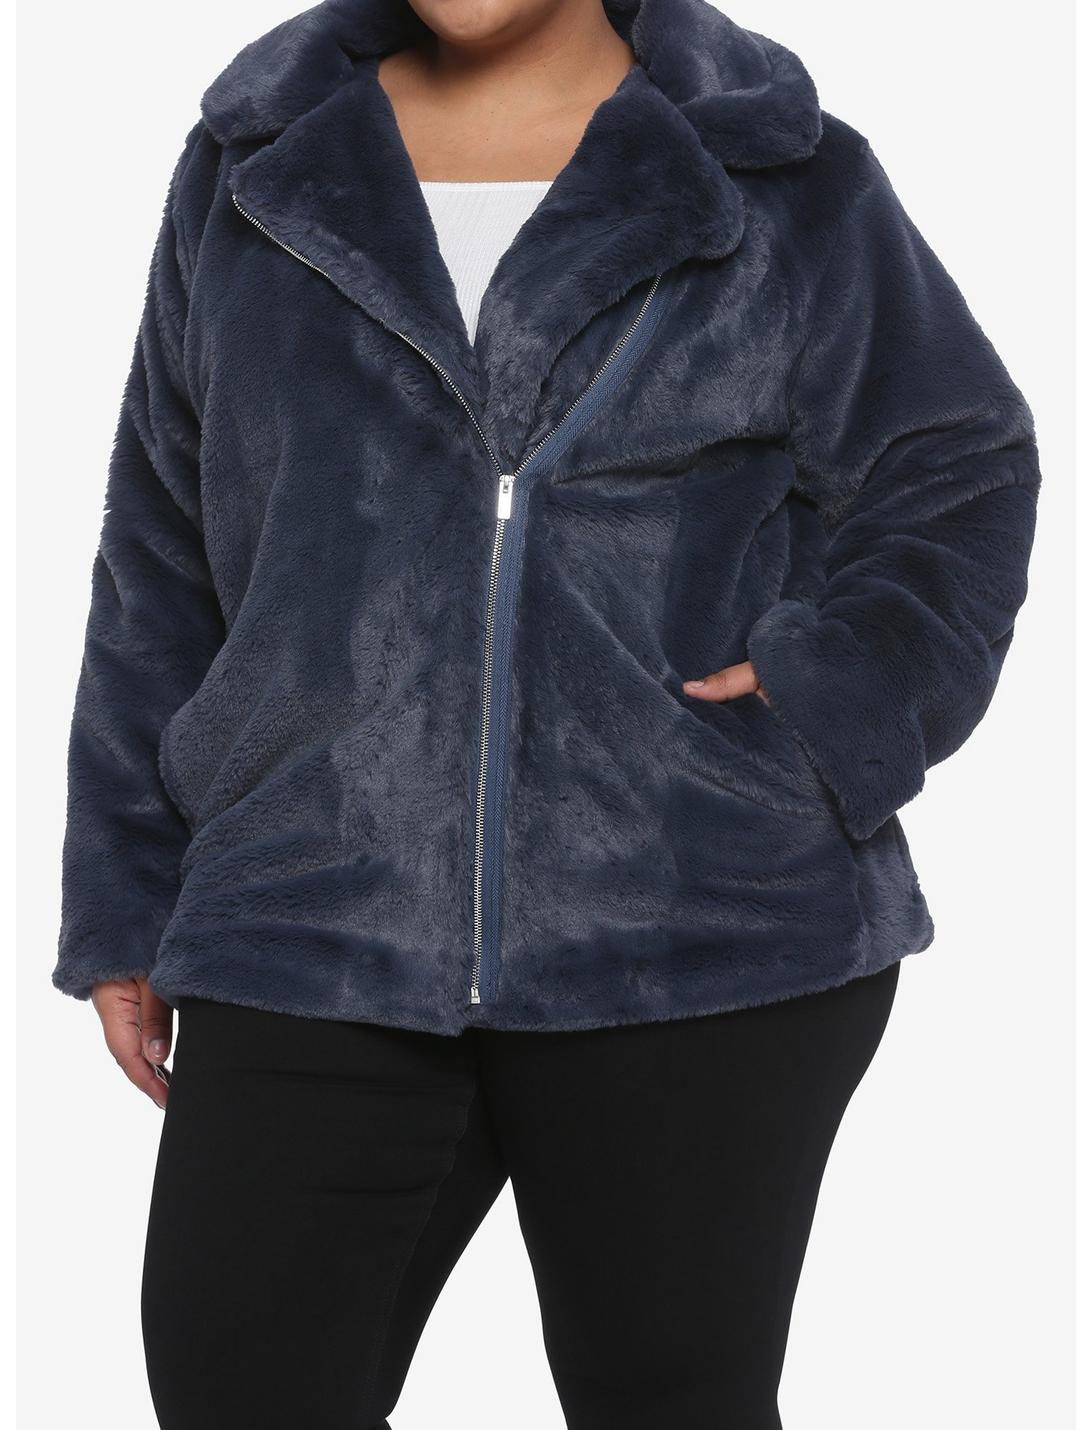 Slate Faux Fur Zipper Girls Jacket Plus Size, NAVY, hi-res